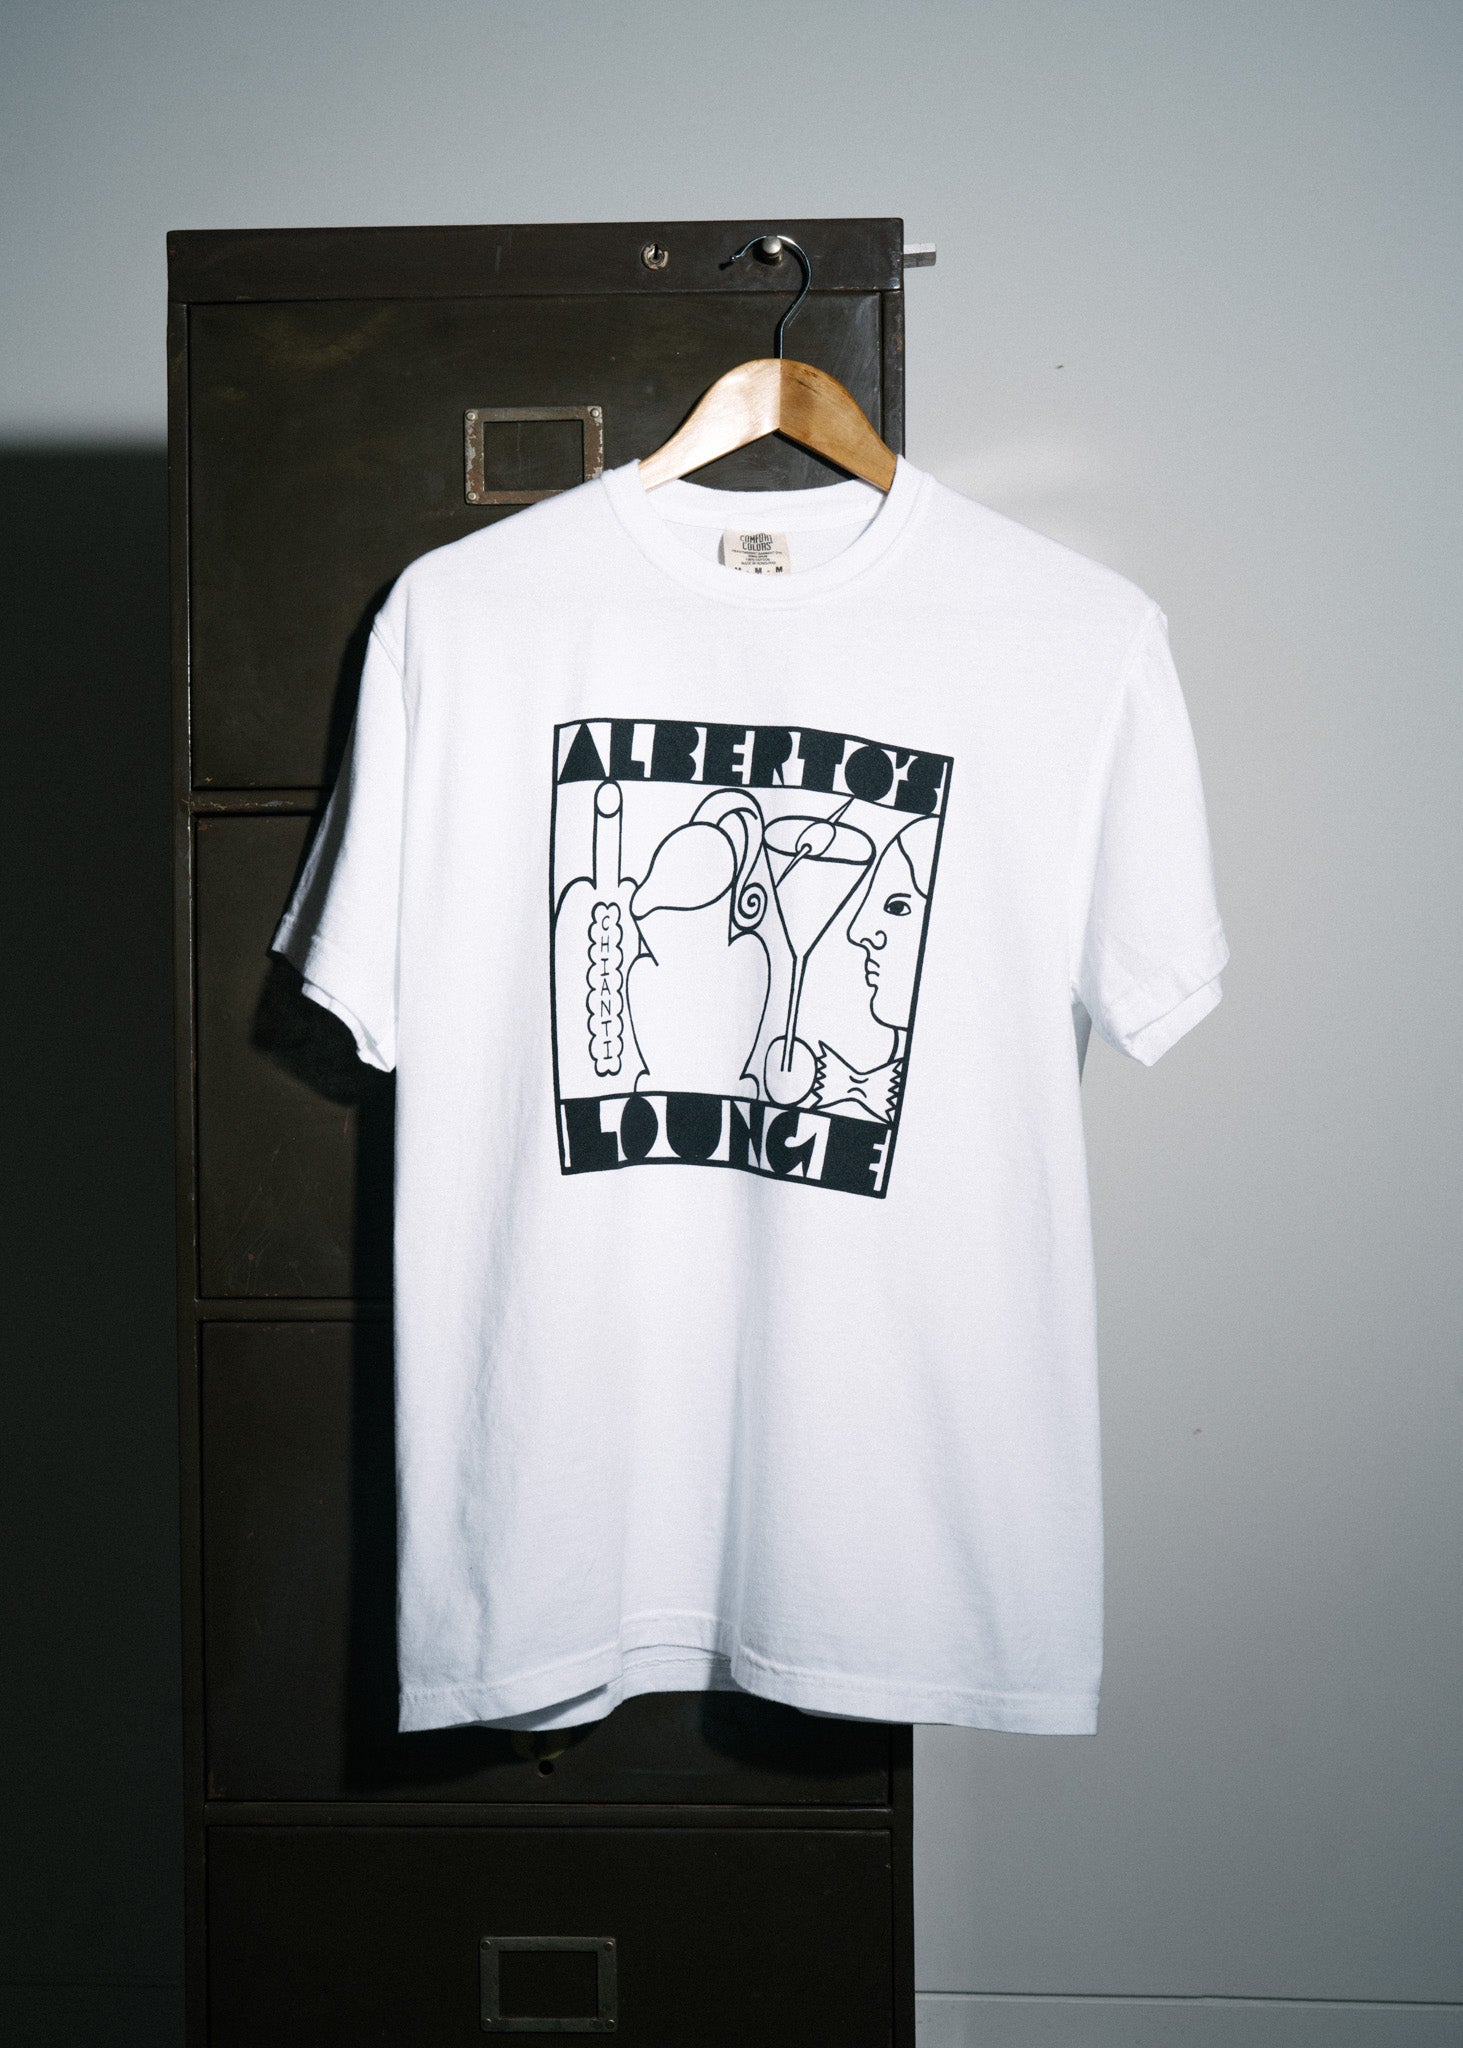 Alberto's Lounge T-Shirt